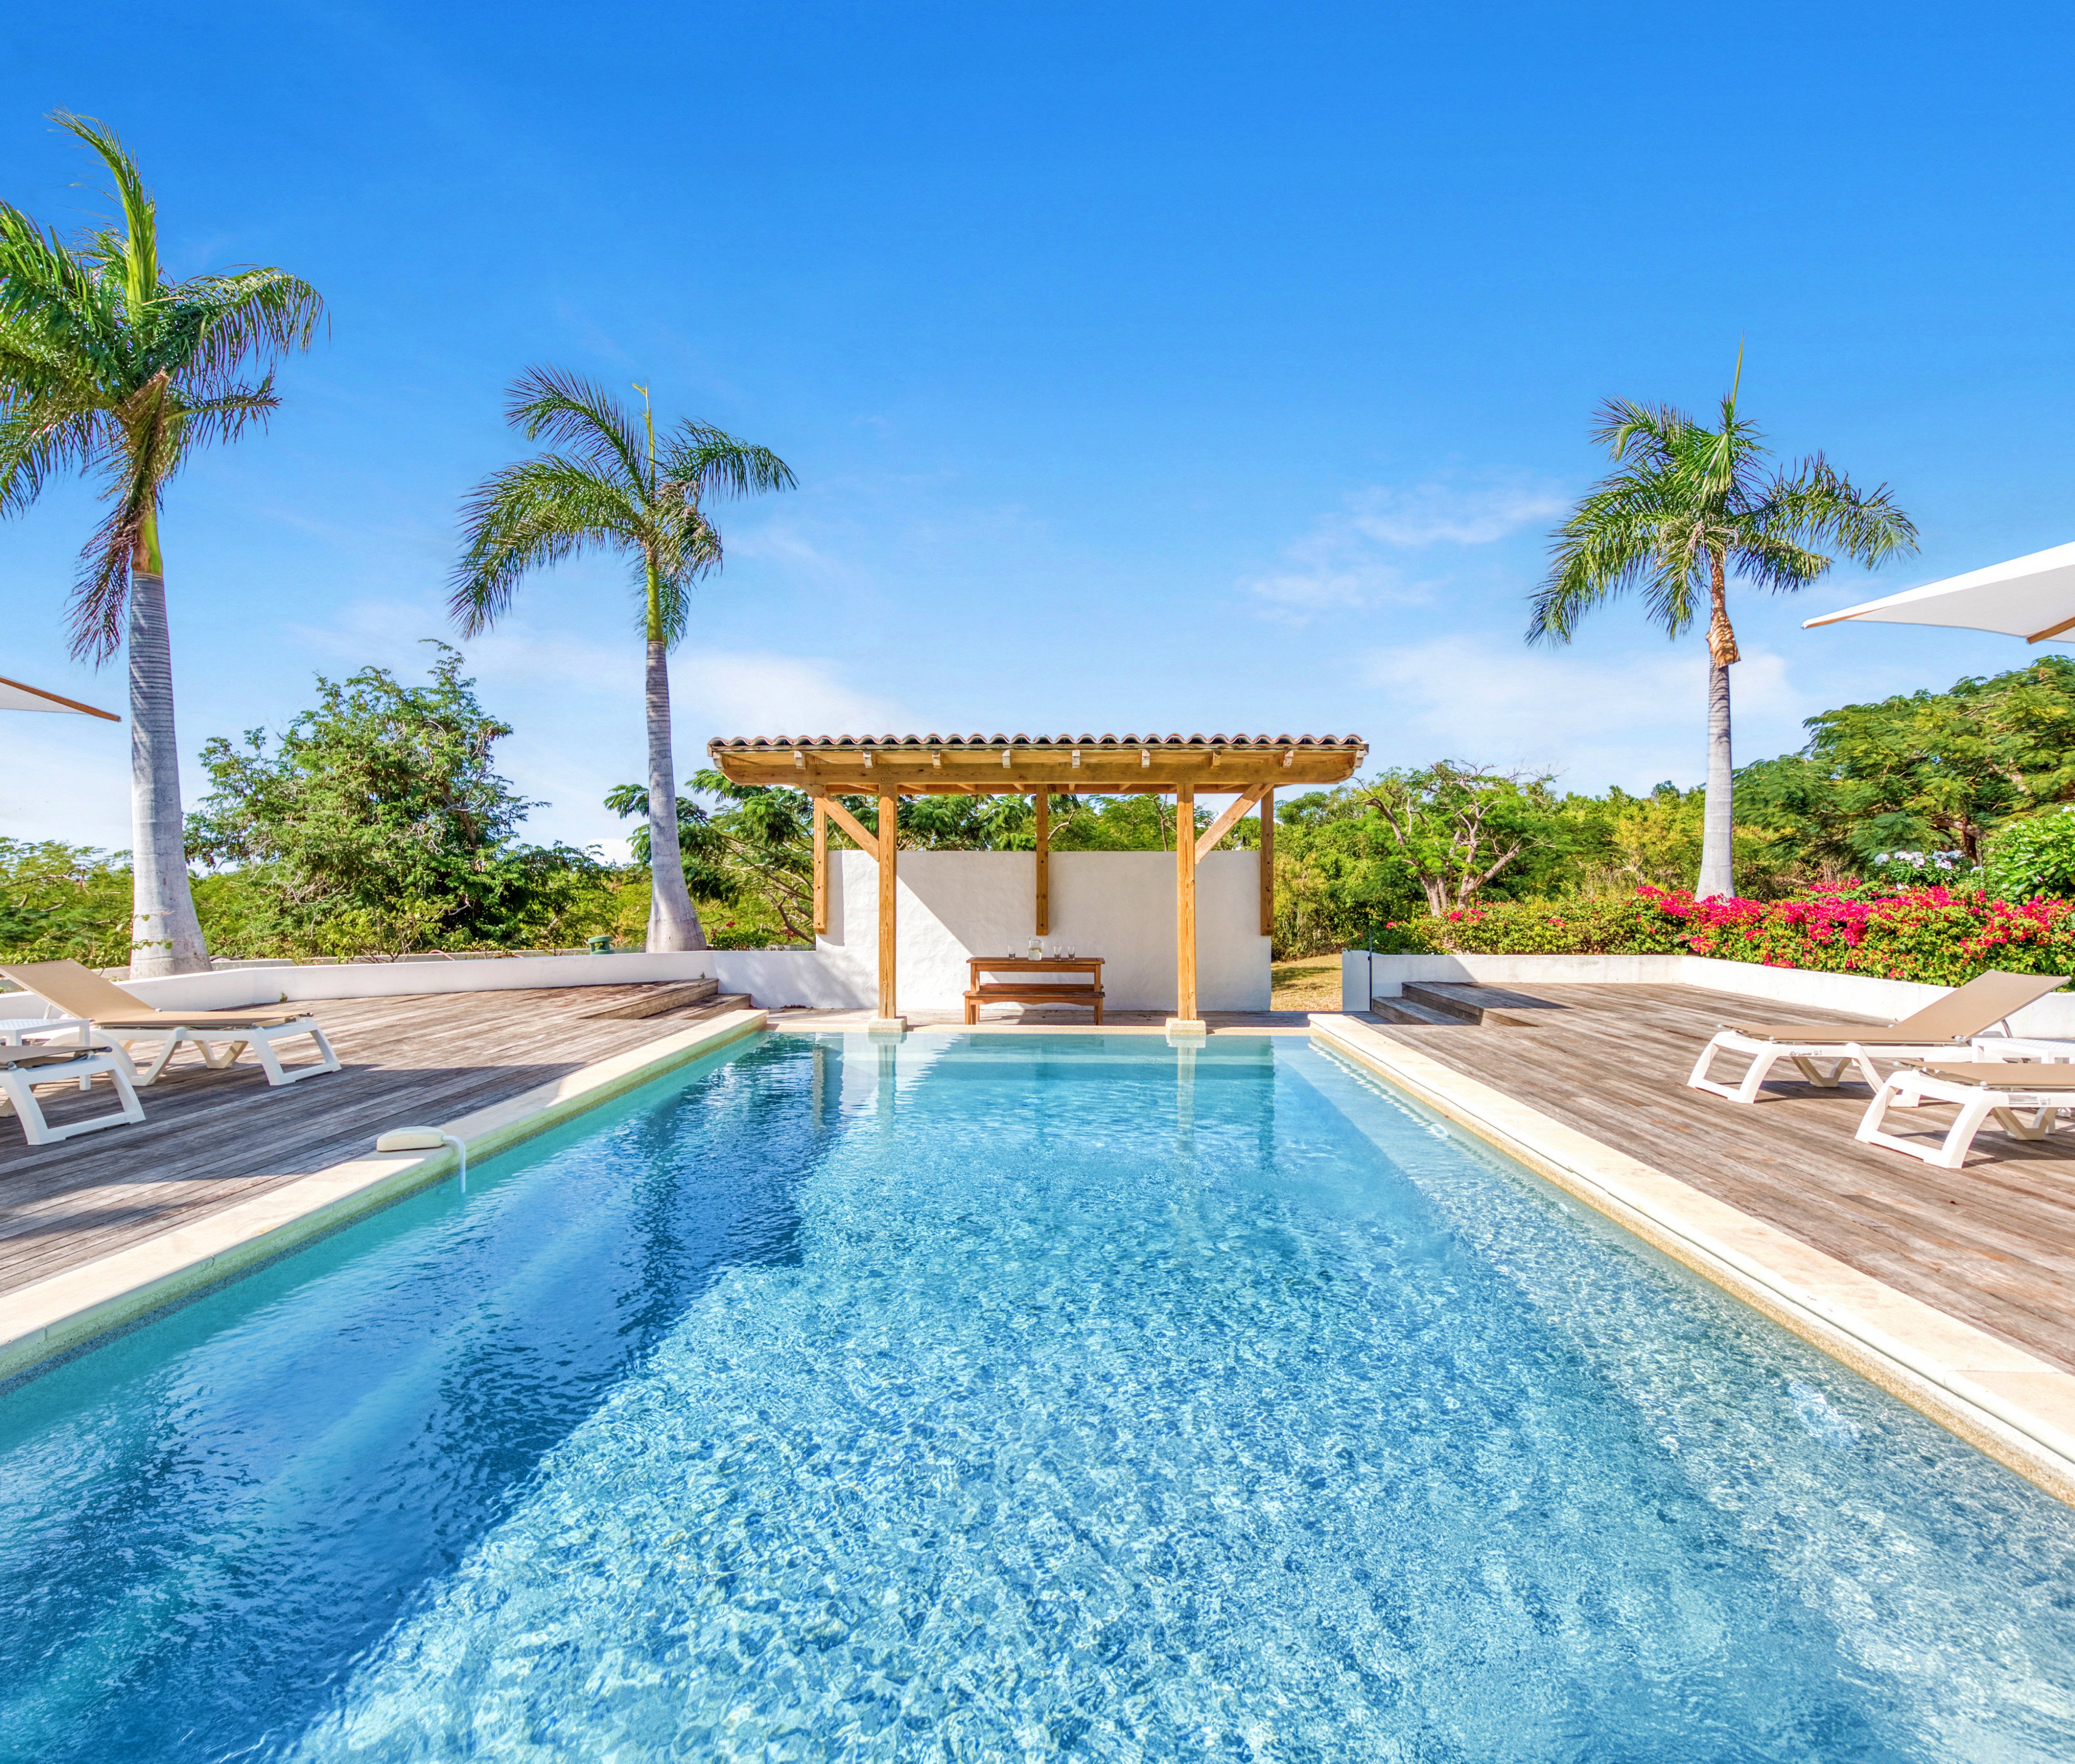 La Hacienda pet friendly vacation rental with private pool